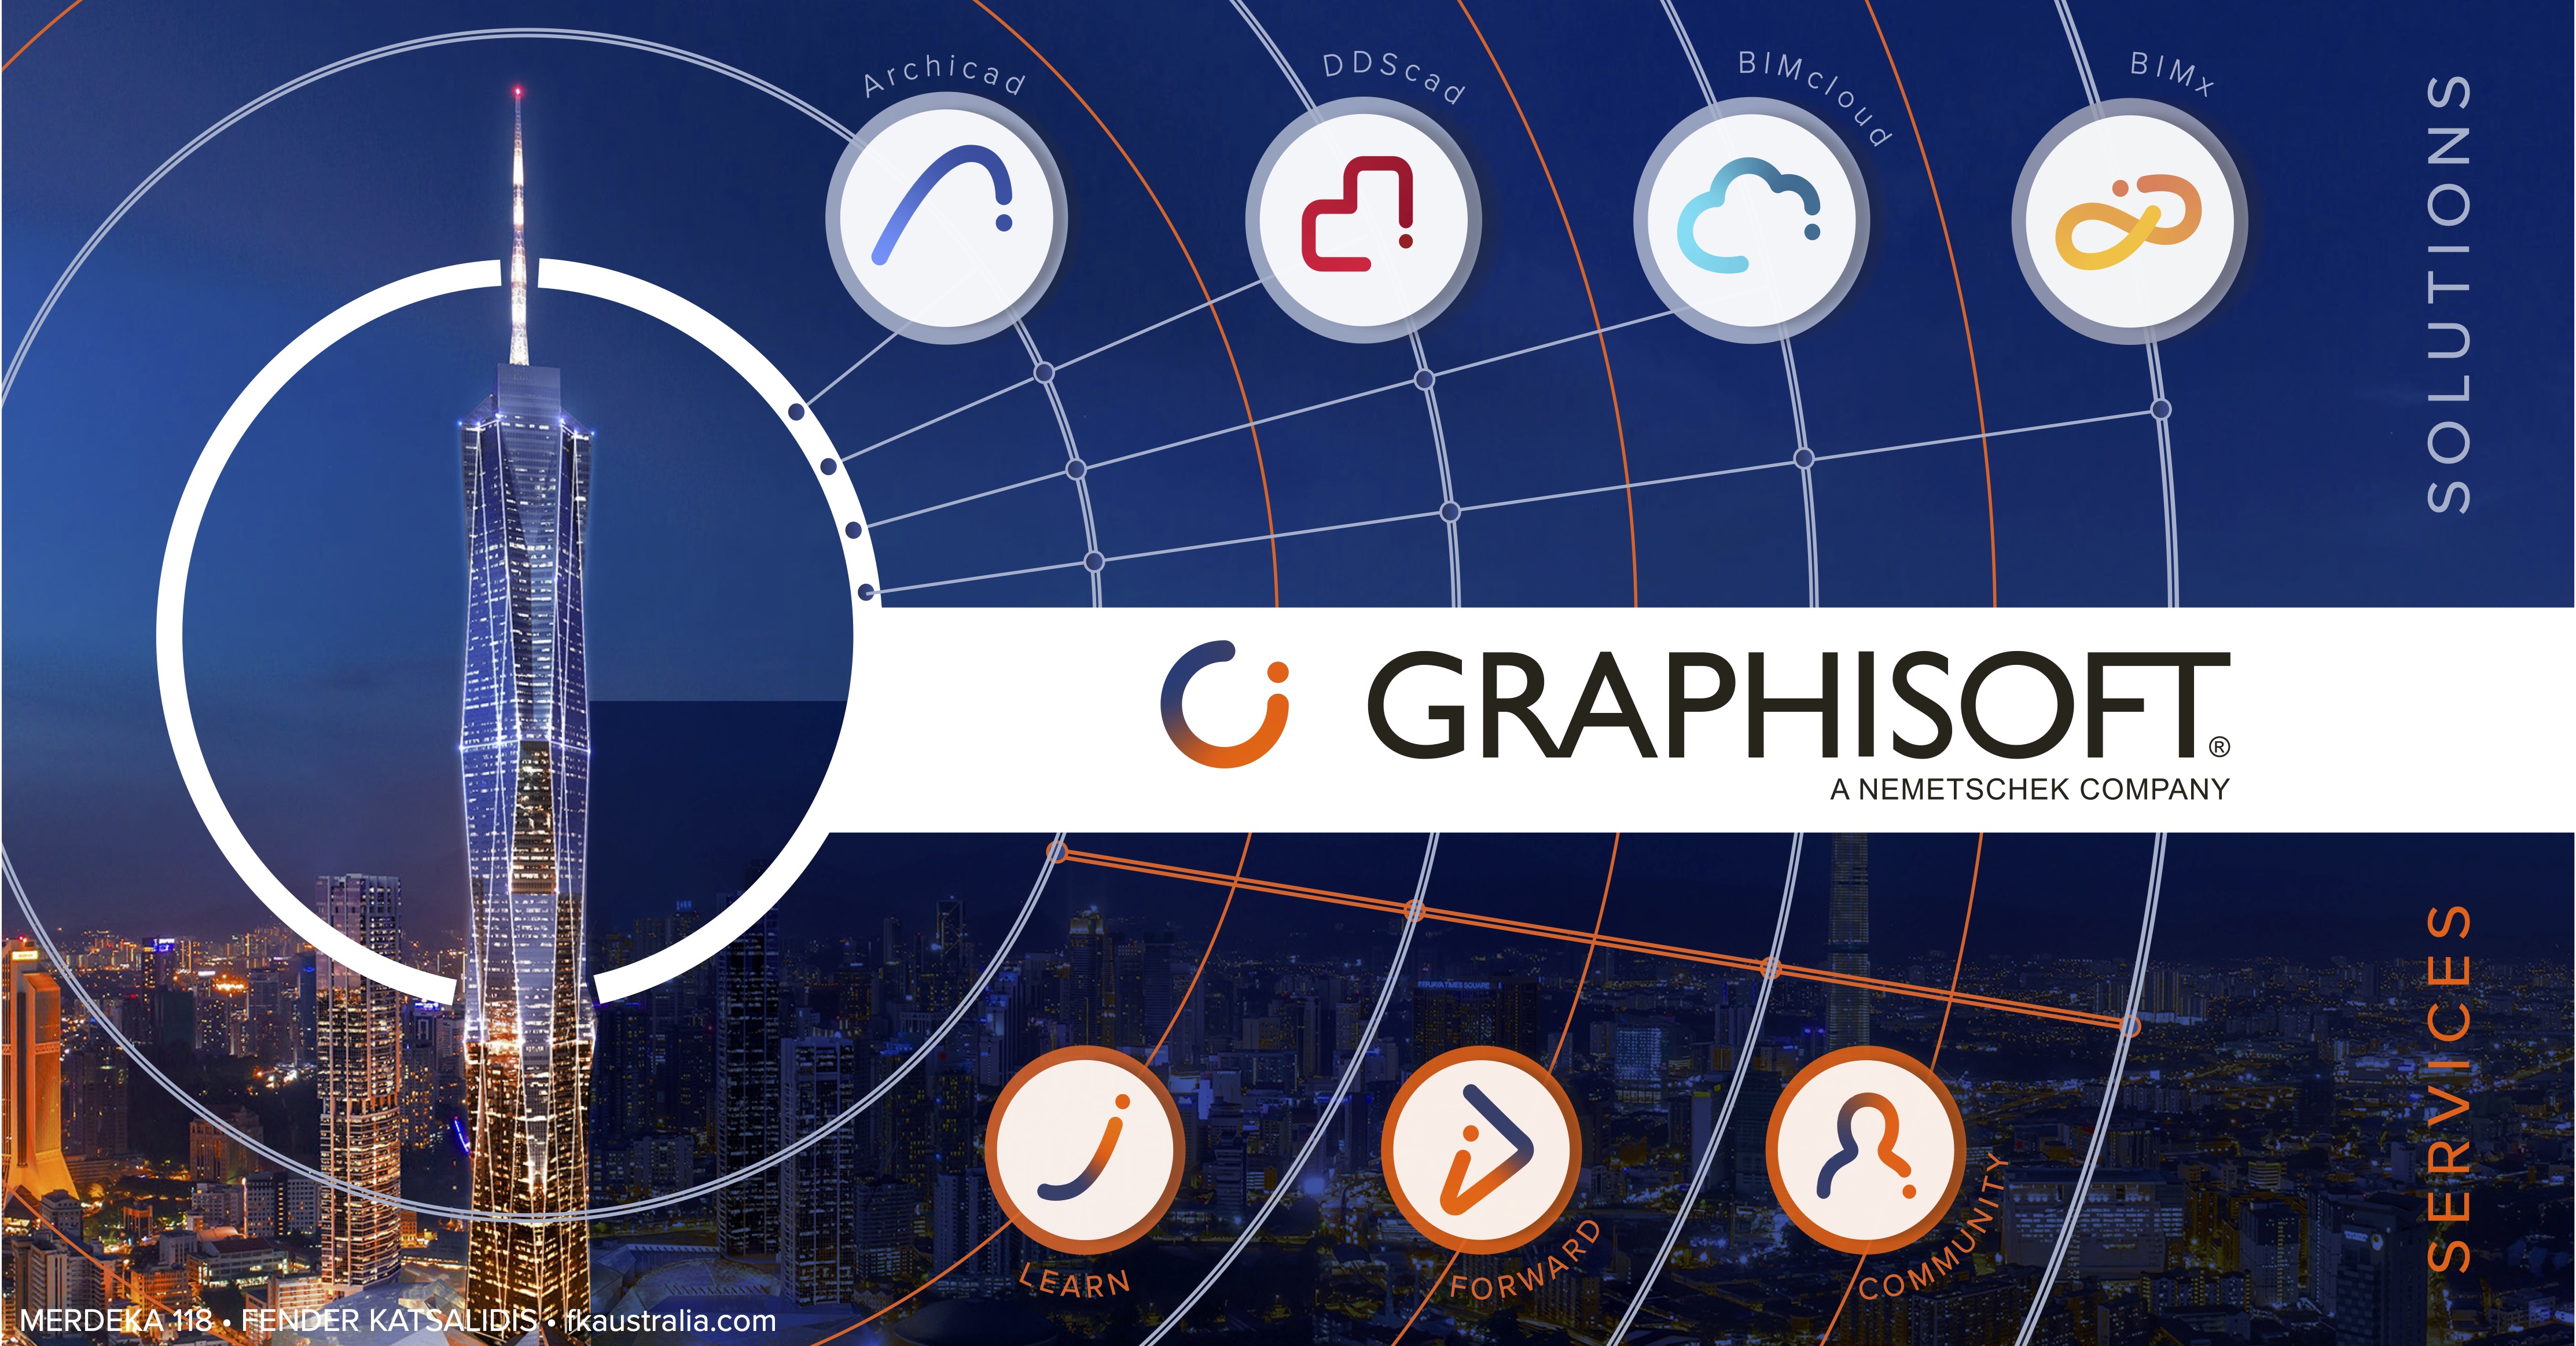 graphisoft-launch-event-banner.jpg